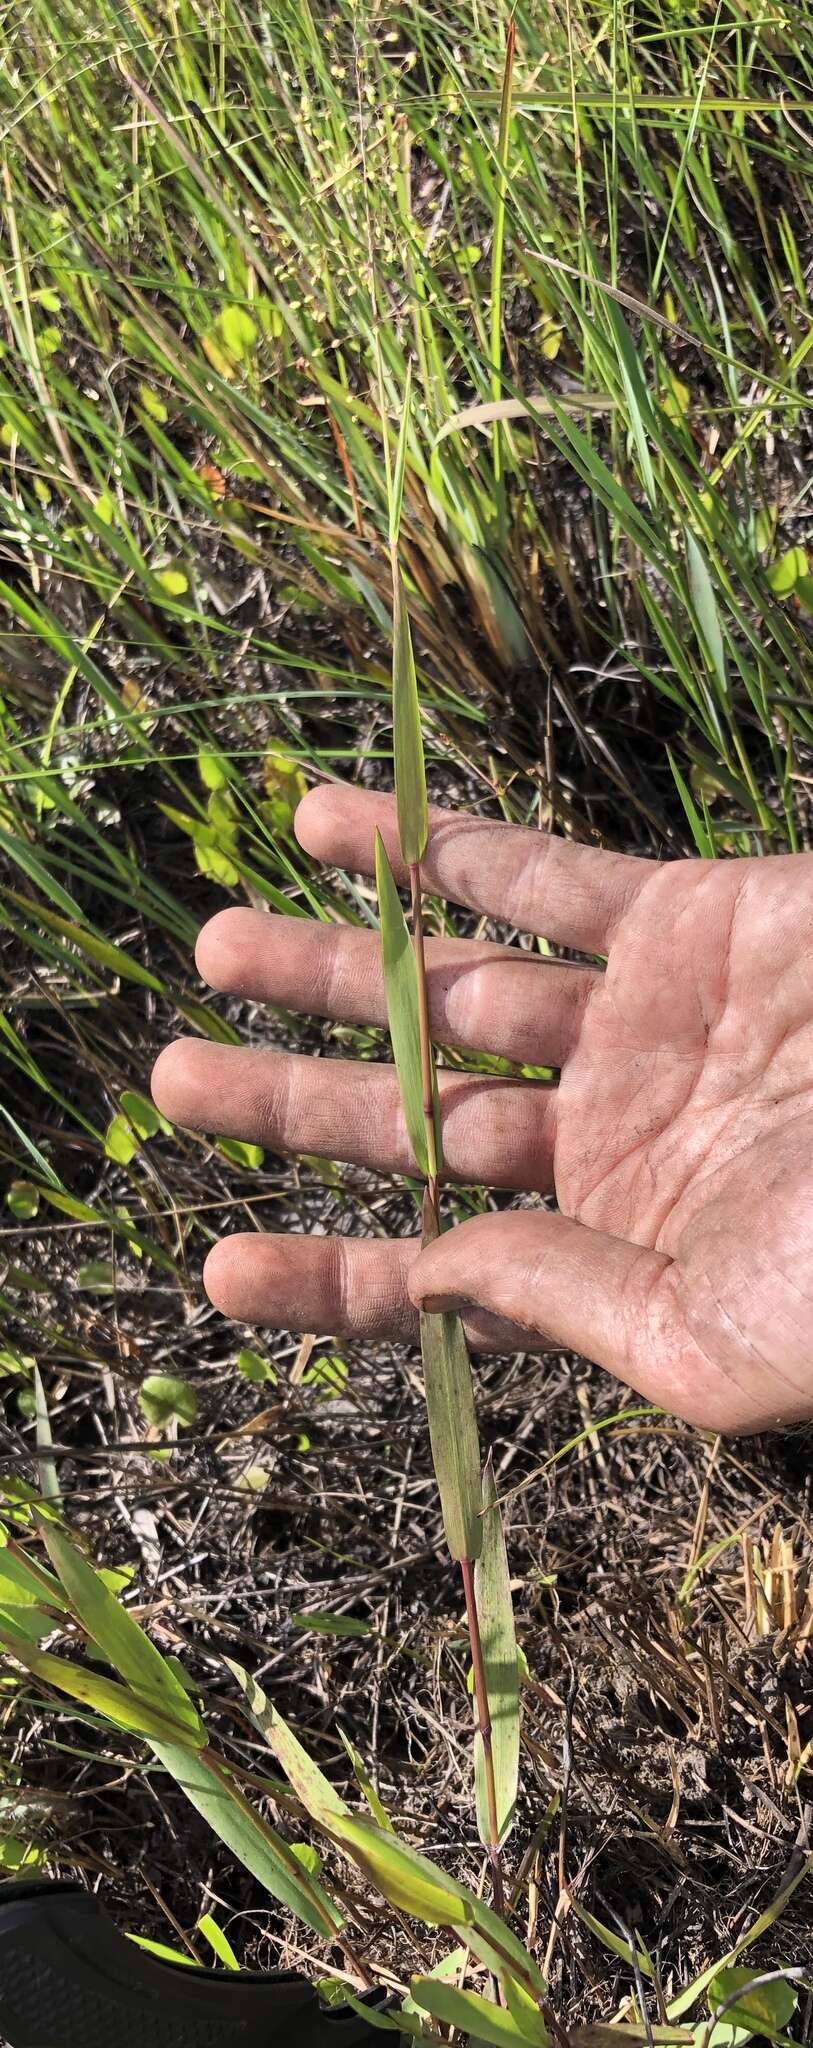 Image of Cypress Rosette Grass